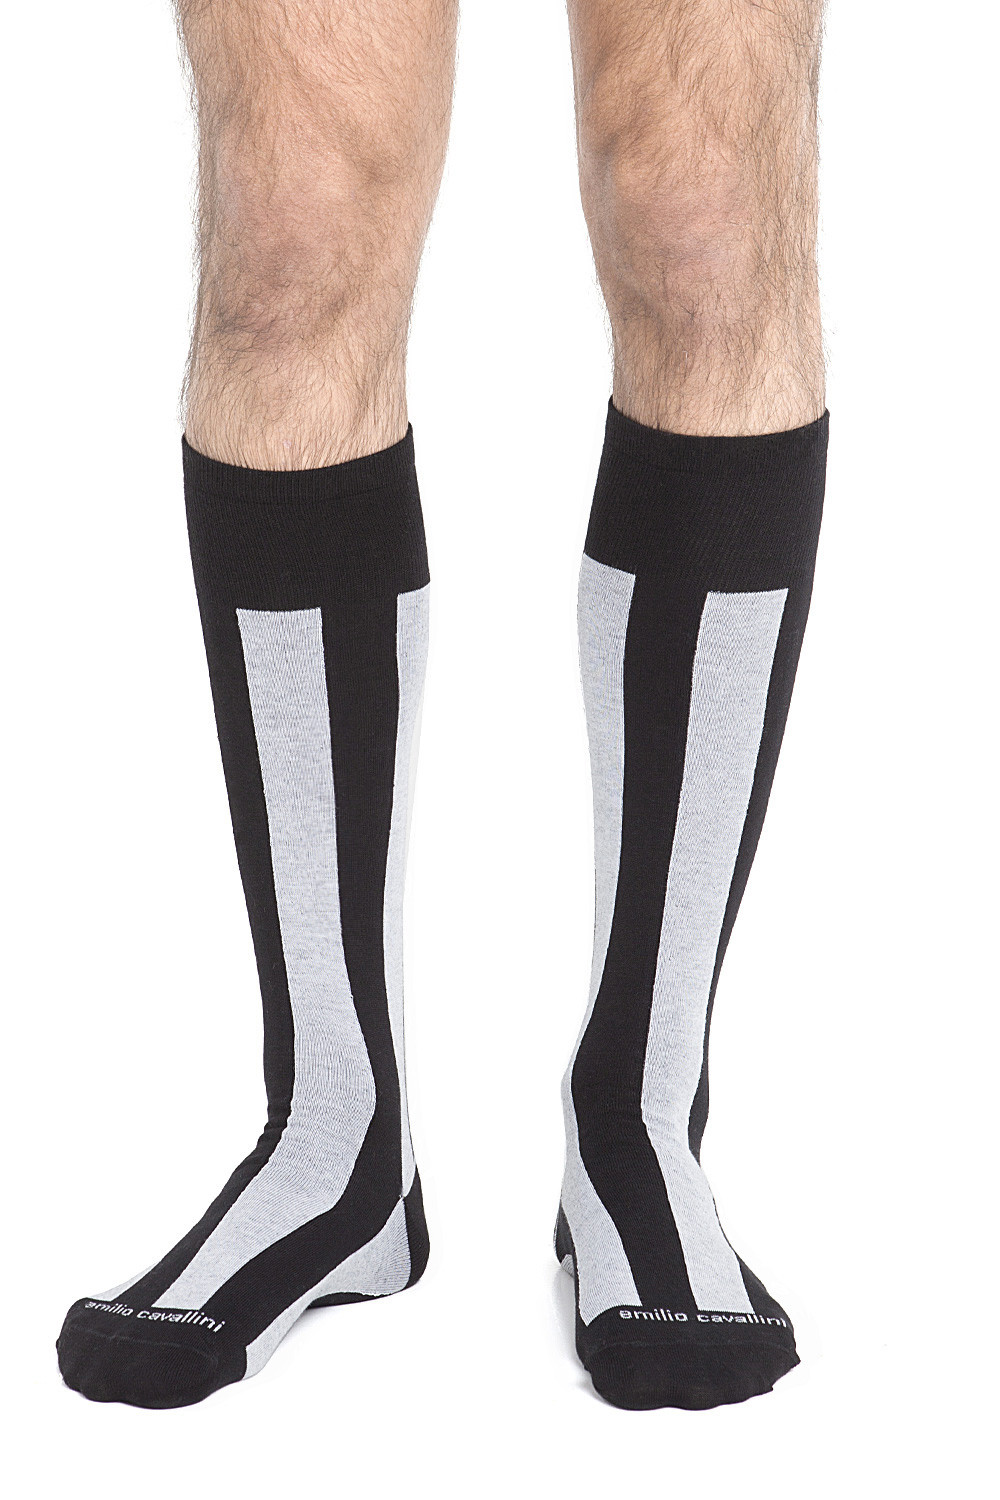 Vertical Stripes Mantyhose | Mantyhose: Tights for Men | Emilio Cavallini